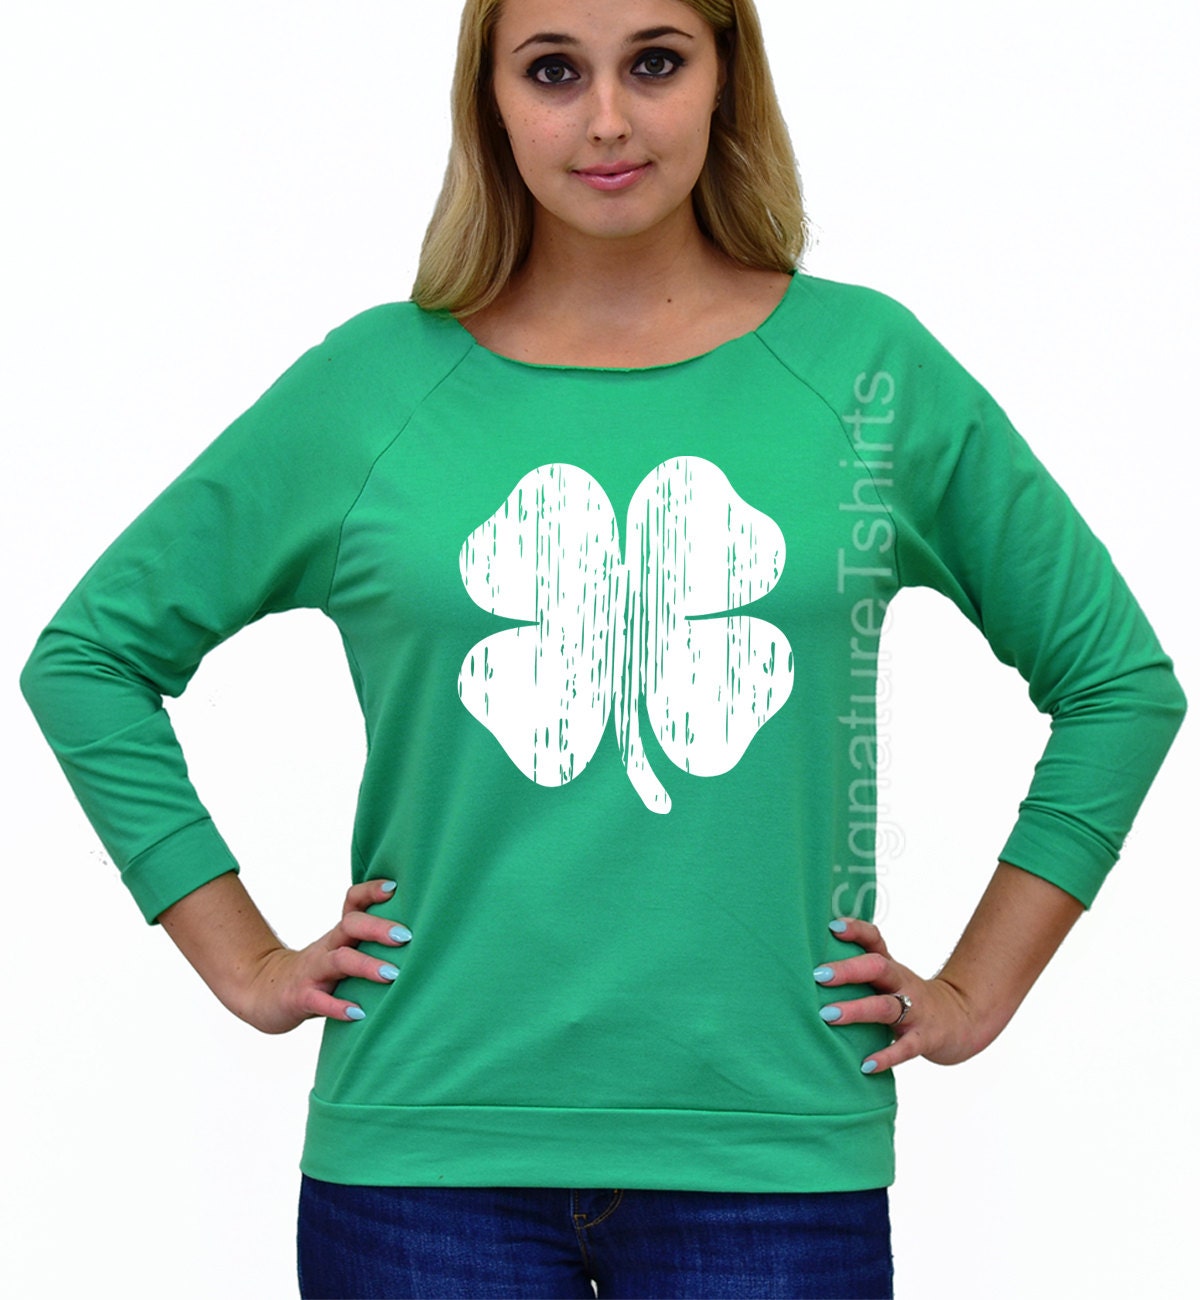 St BOGO Clover Shamrock St Patricks Day Plus Size Top Irish St Patricks Day Shirt Patricks Day Off the Shoulder Slouchy Tee for Women